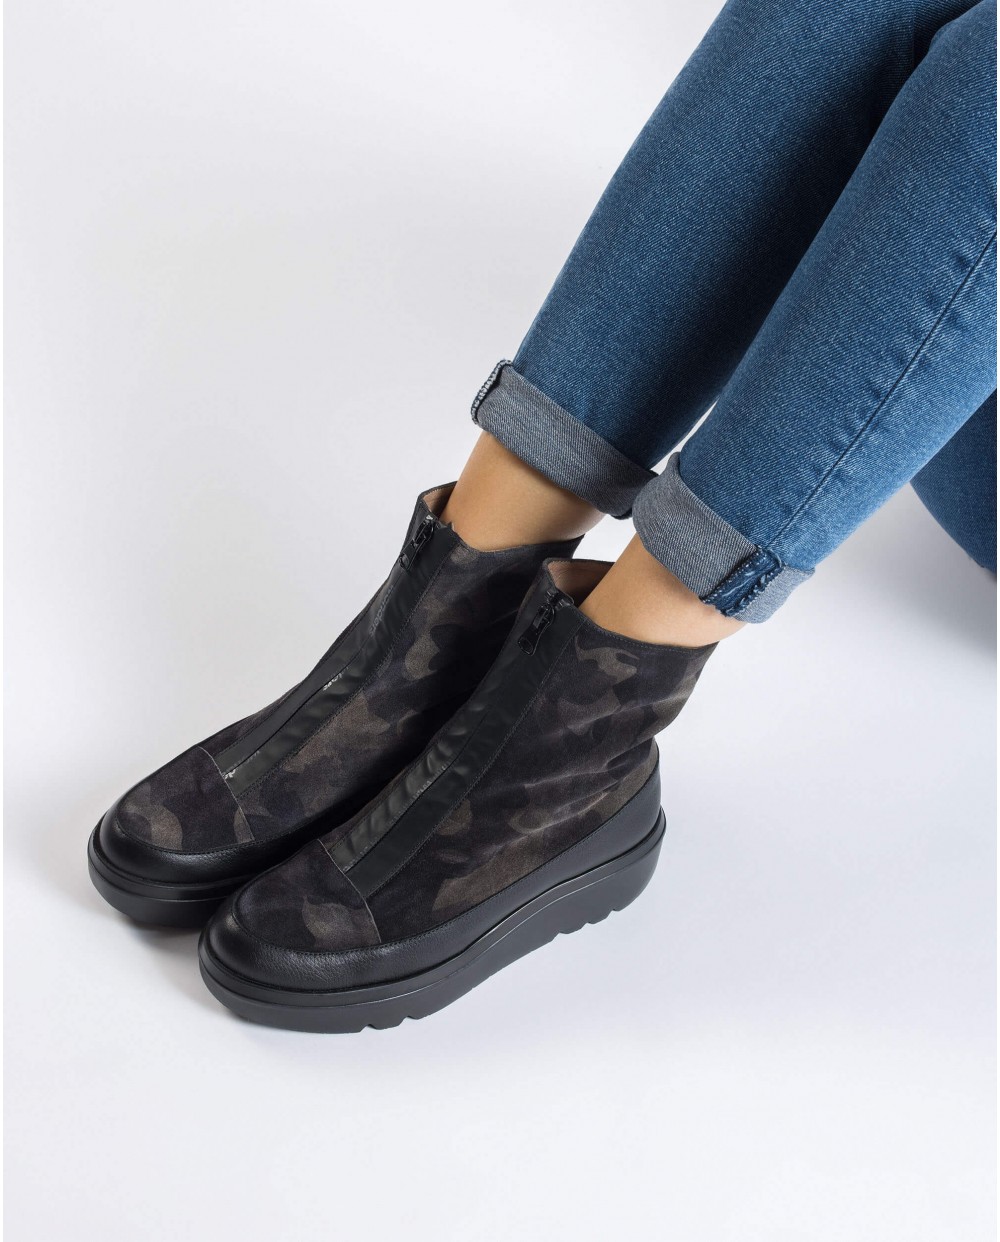 Wonders-New in-Livia Animal print Ankle Boot